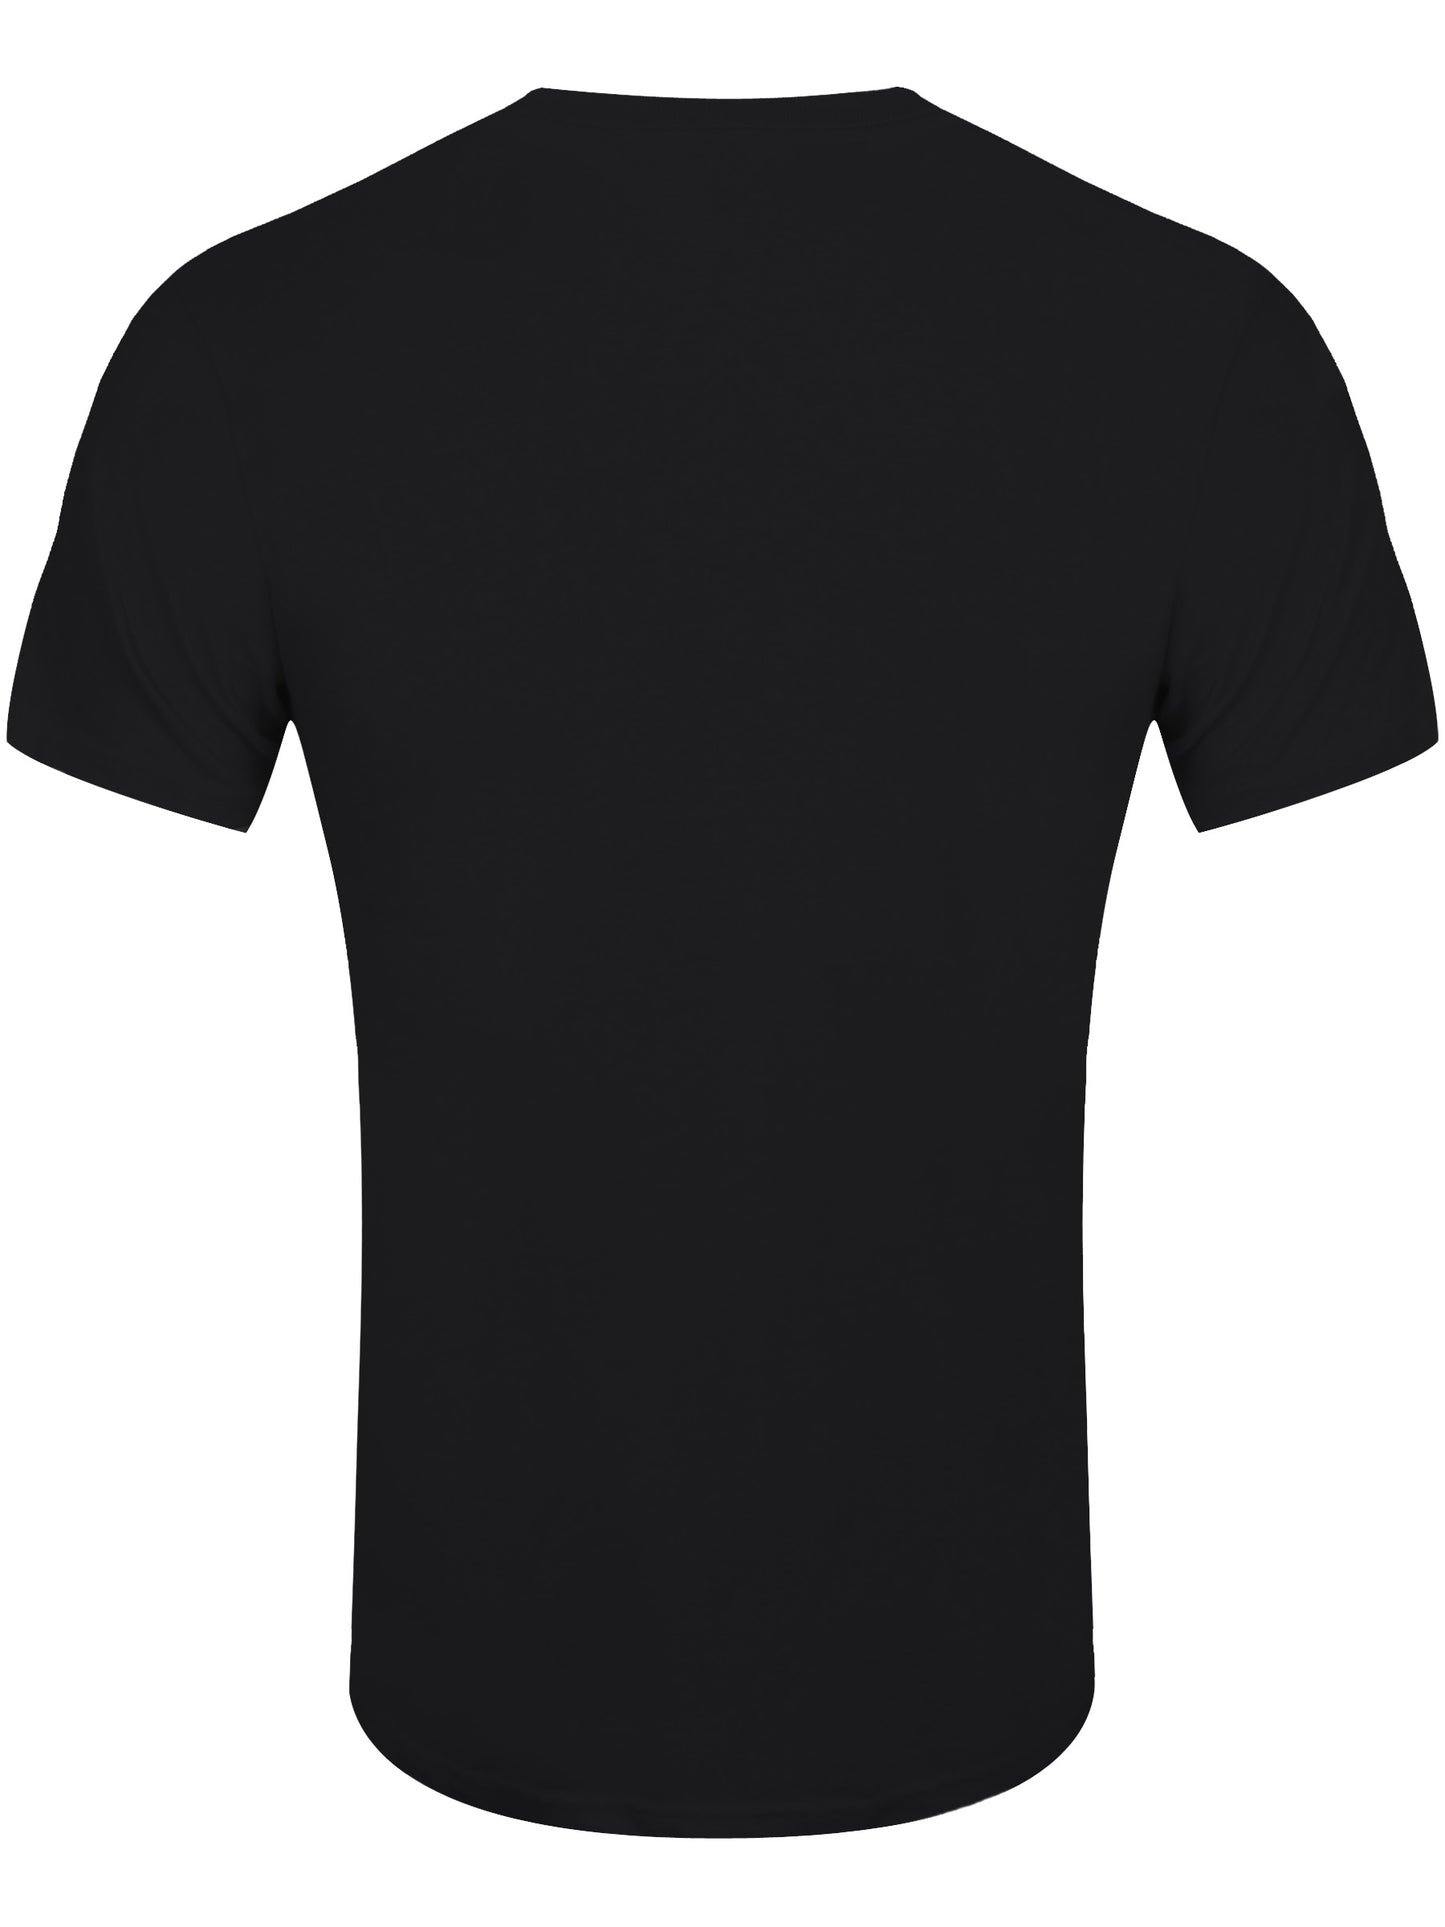 Star Wars Empire Strikes Back Logo Men's Black T-Shirt